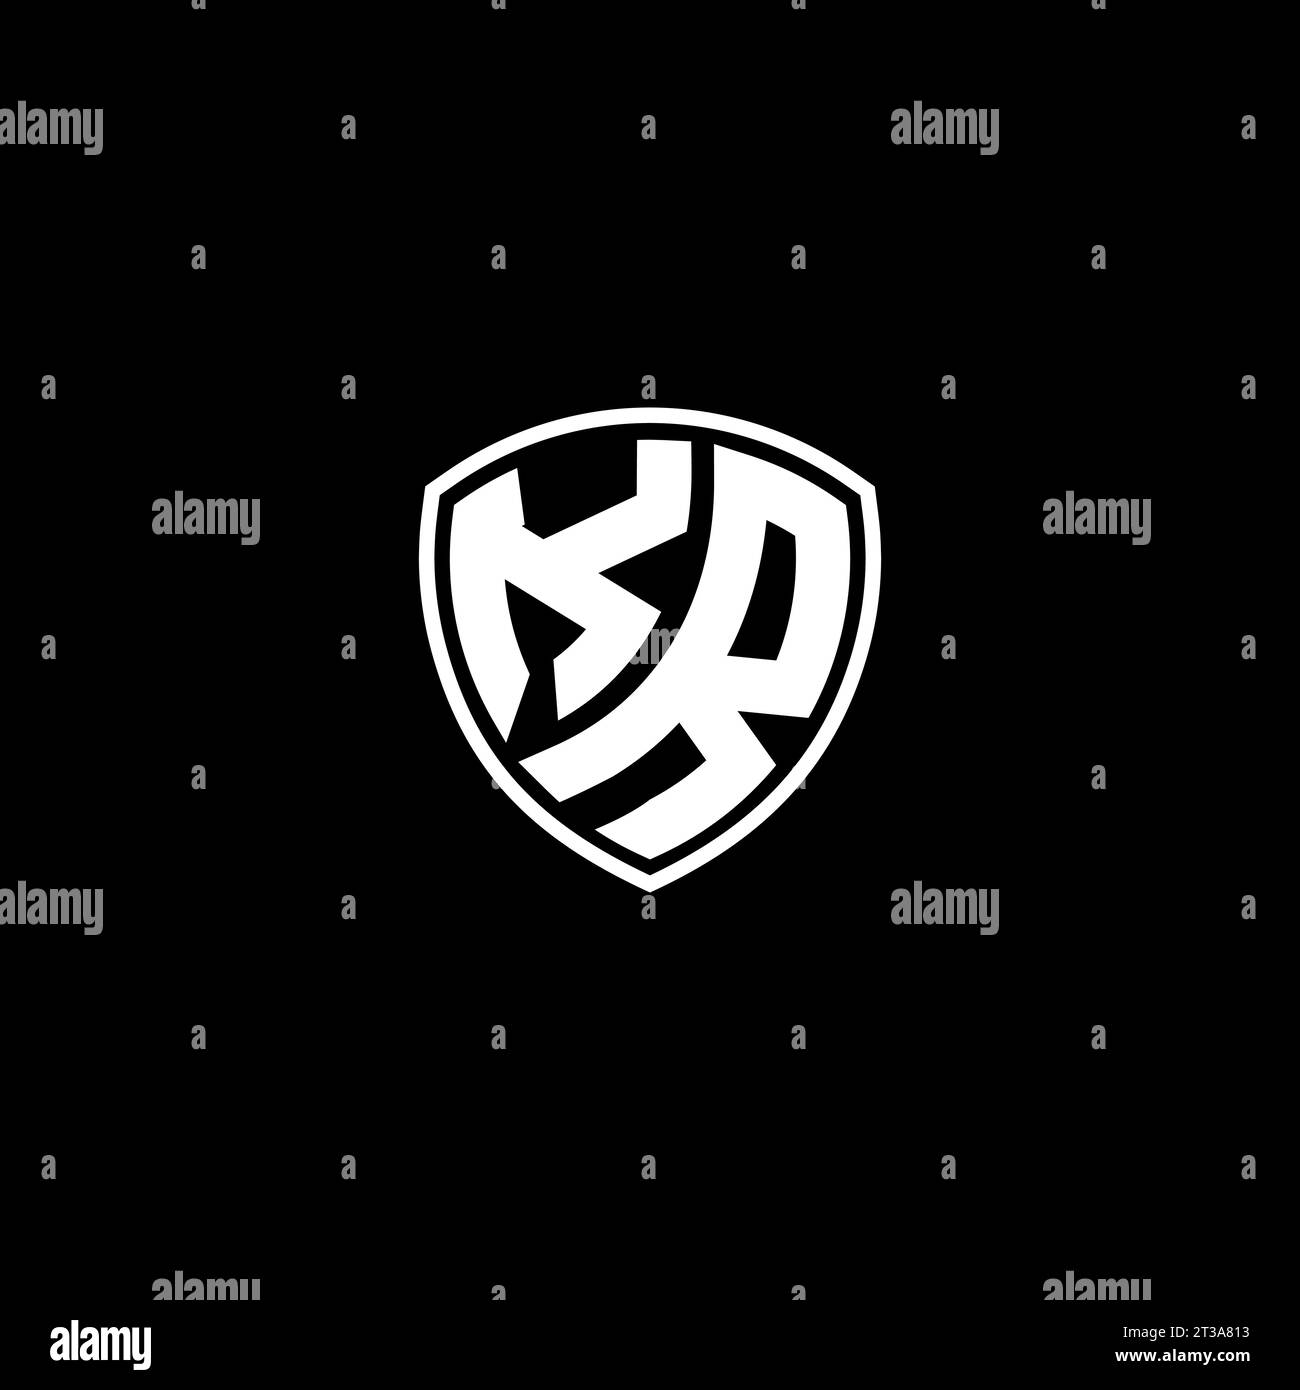 KR logo monogram emblem style with shield shape design template ideas Stock Vector